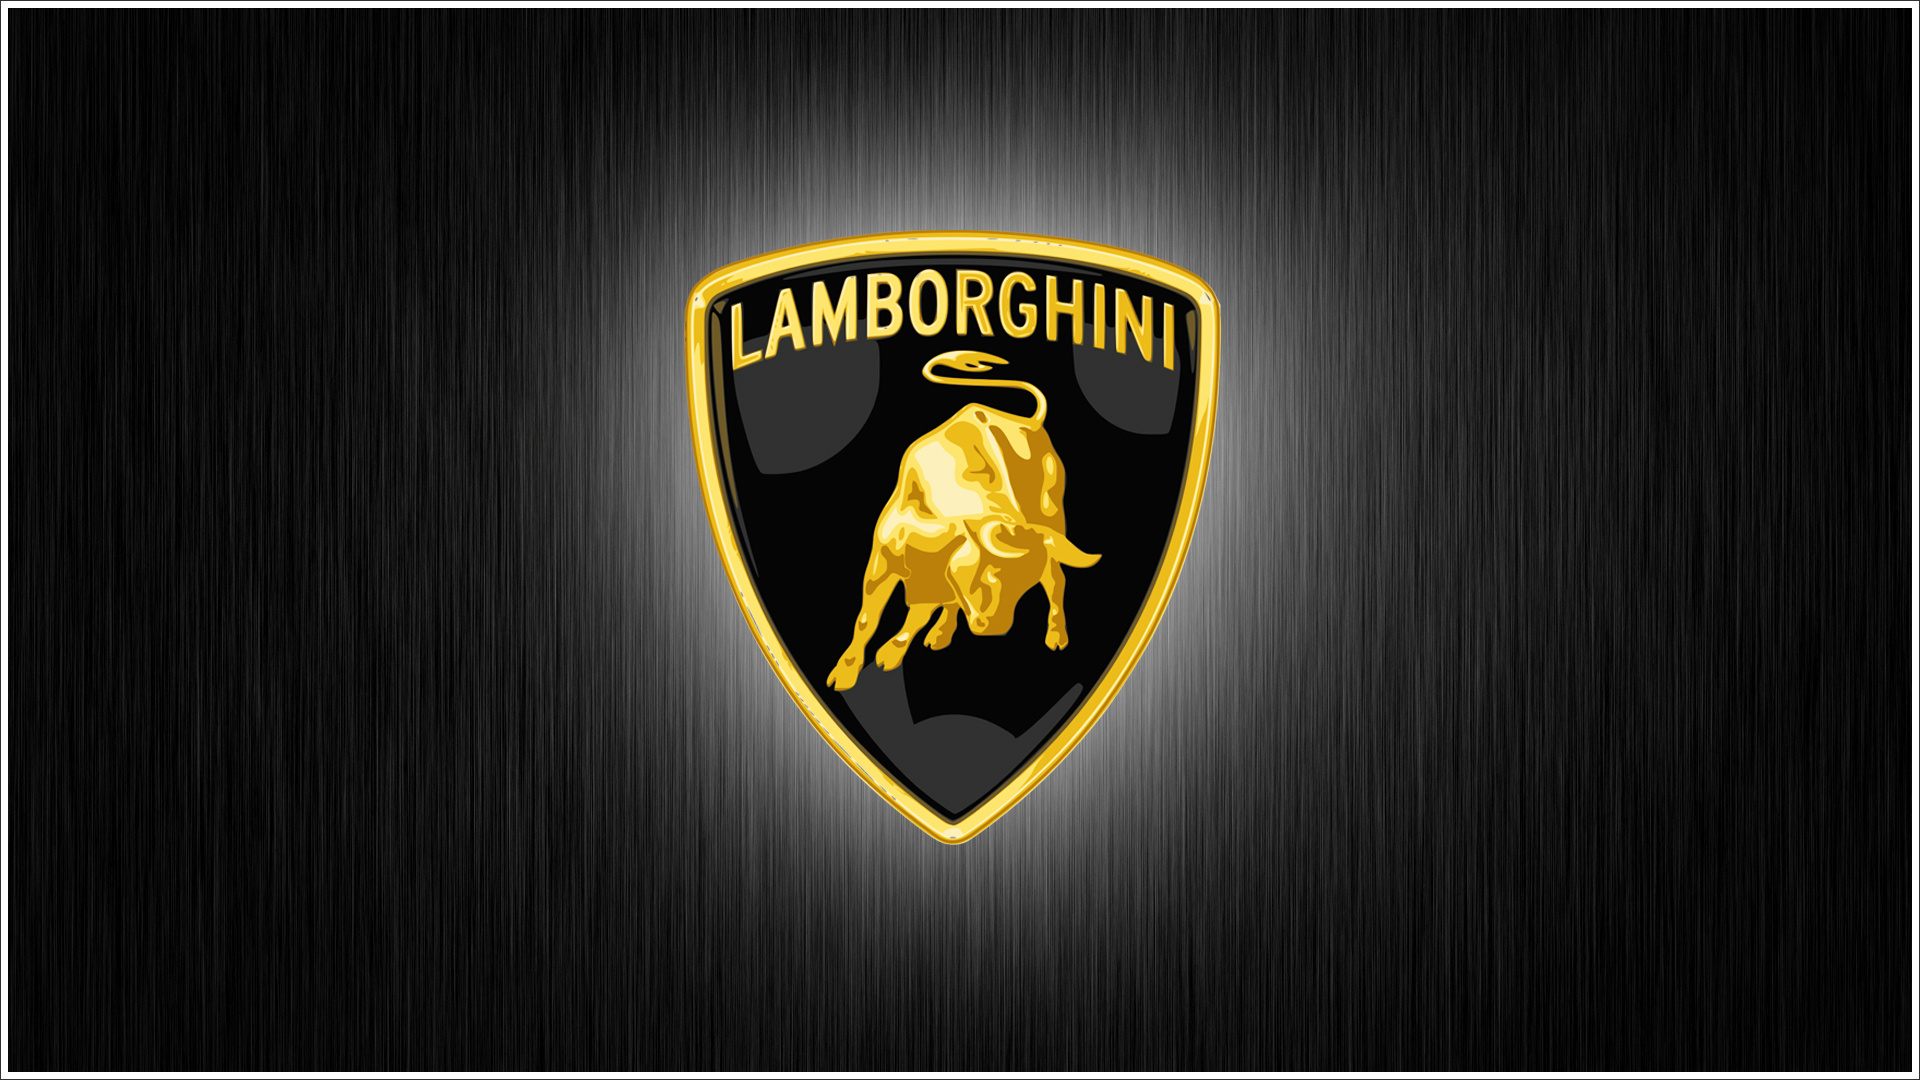 Lamborghini Logo, Striking wallpaper, Premium brand logo, High-quality image, 1920x1080 Full HD Desktop